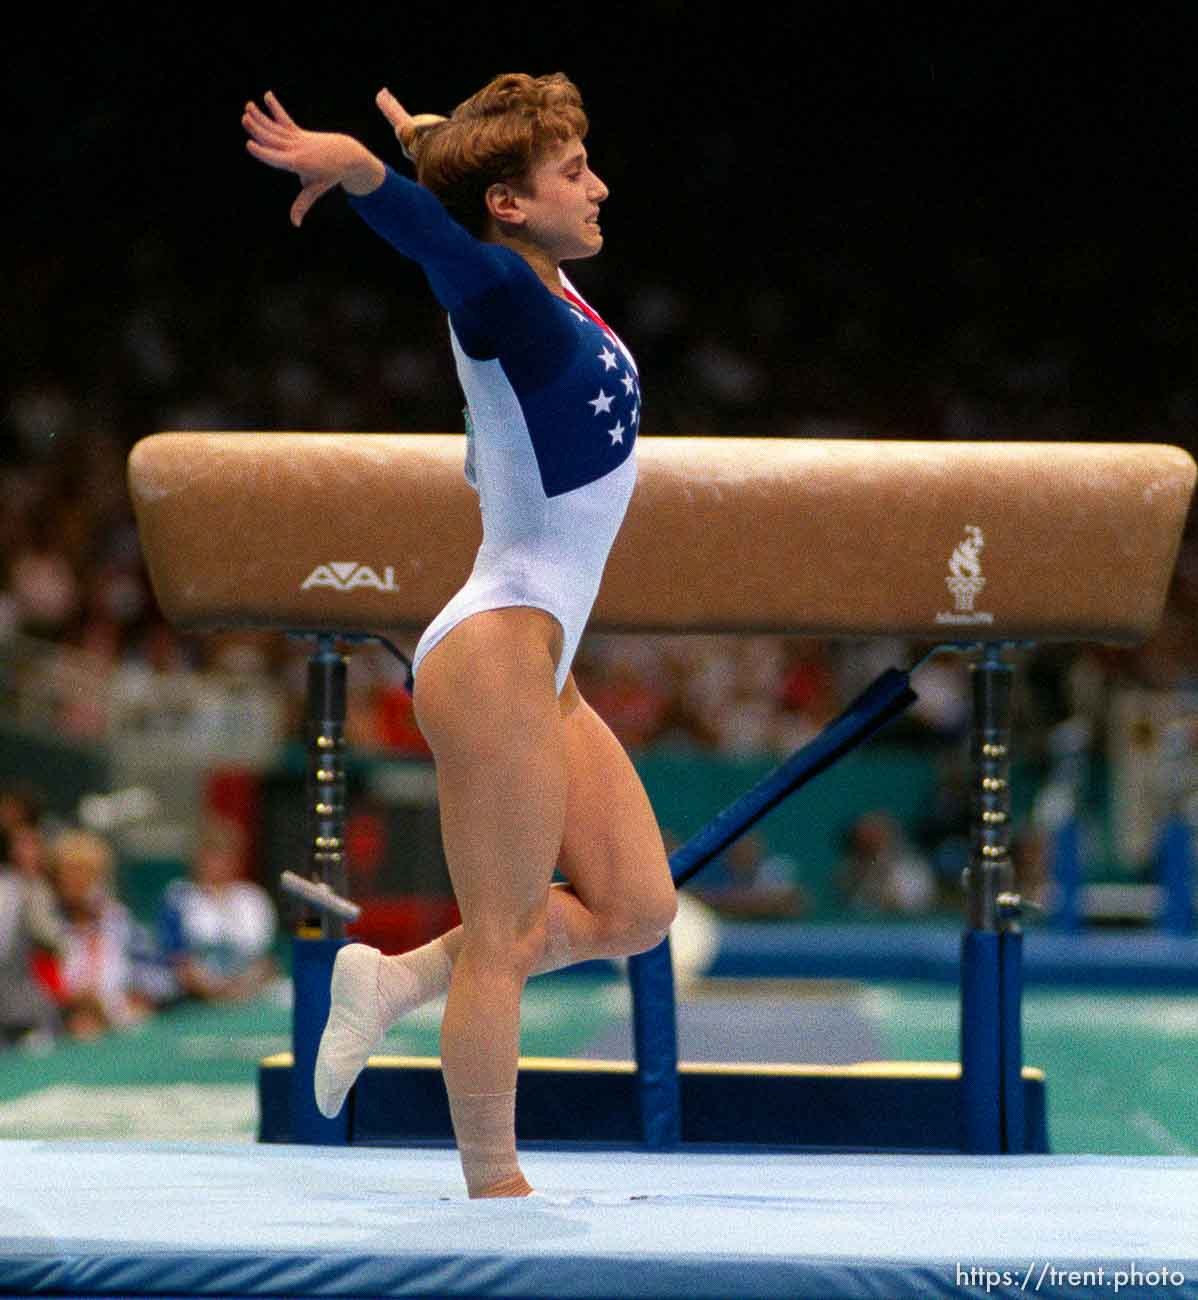 Women’s Gymnastics – USA Gold